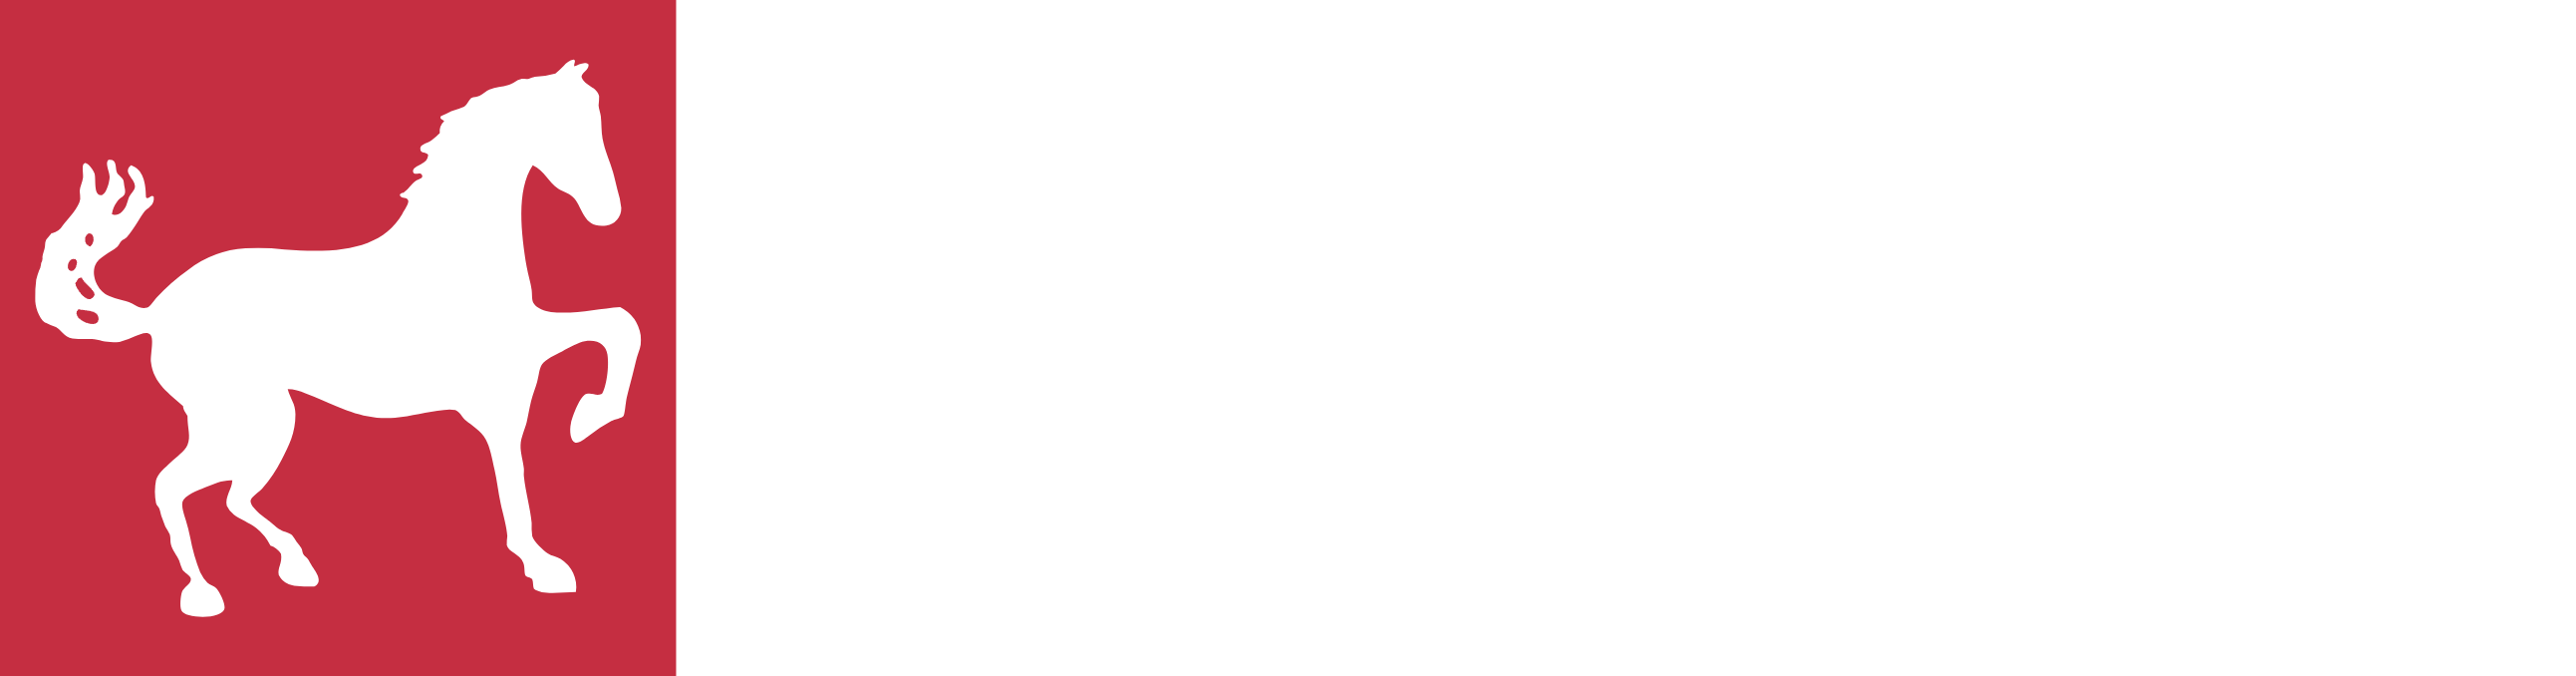 Whitehorse Capital